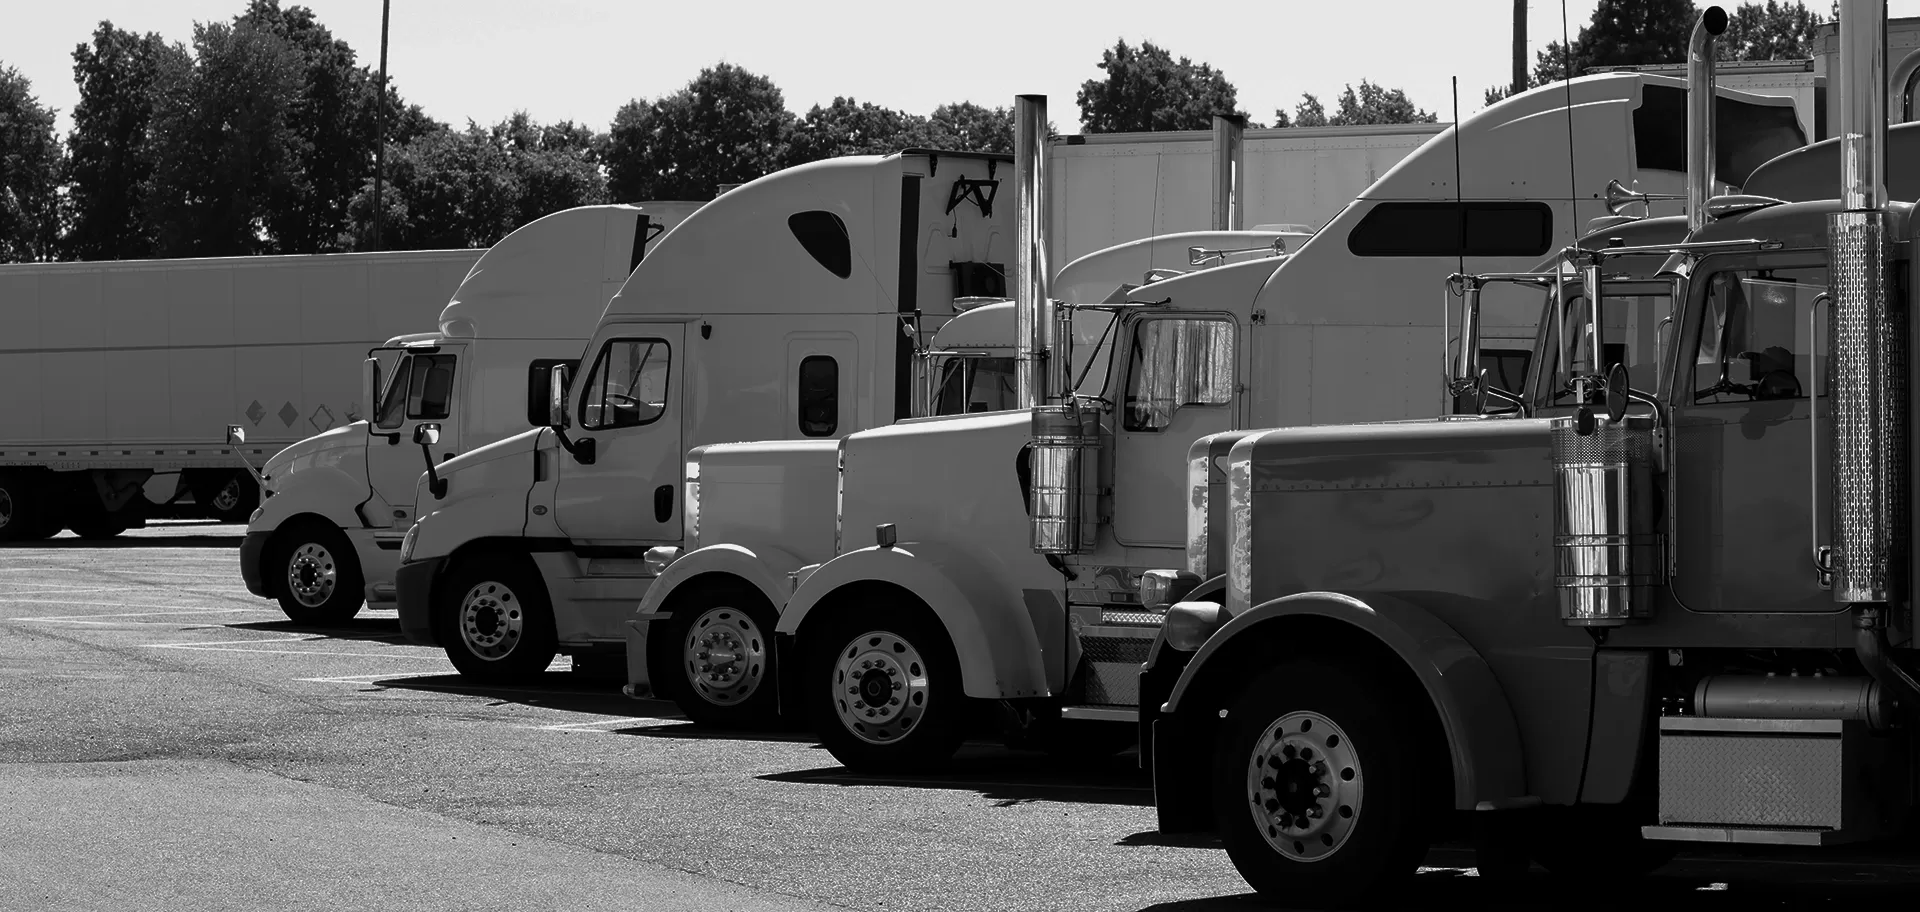 Our trucks